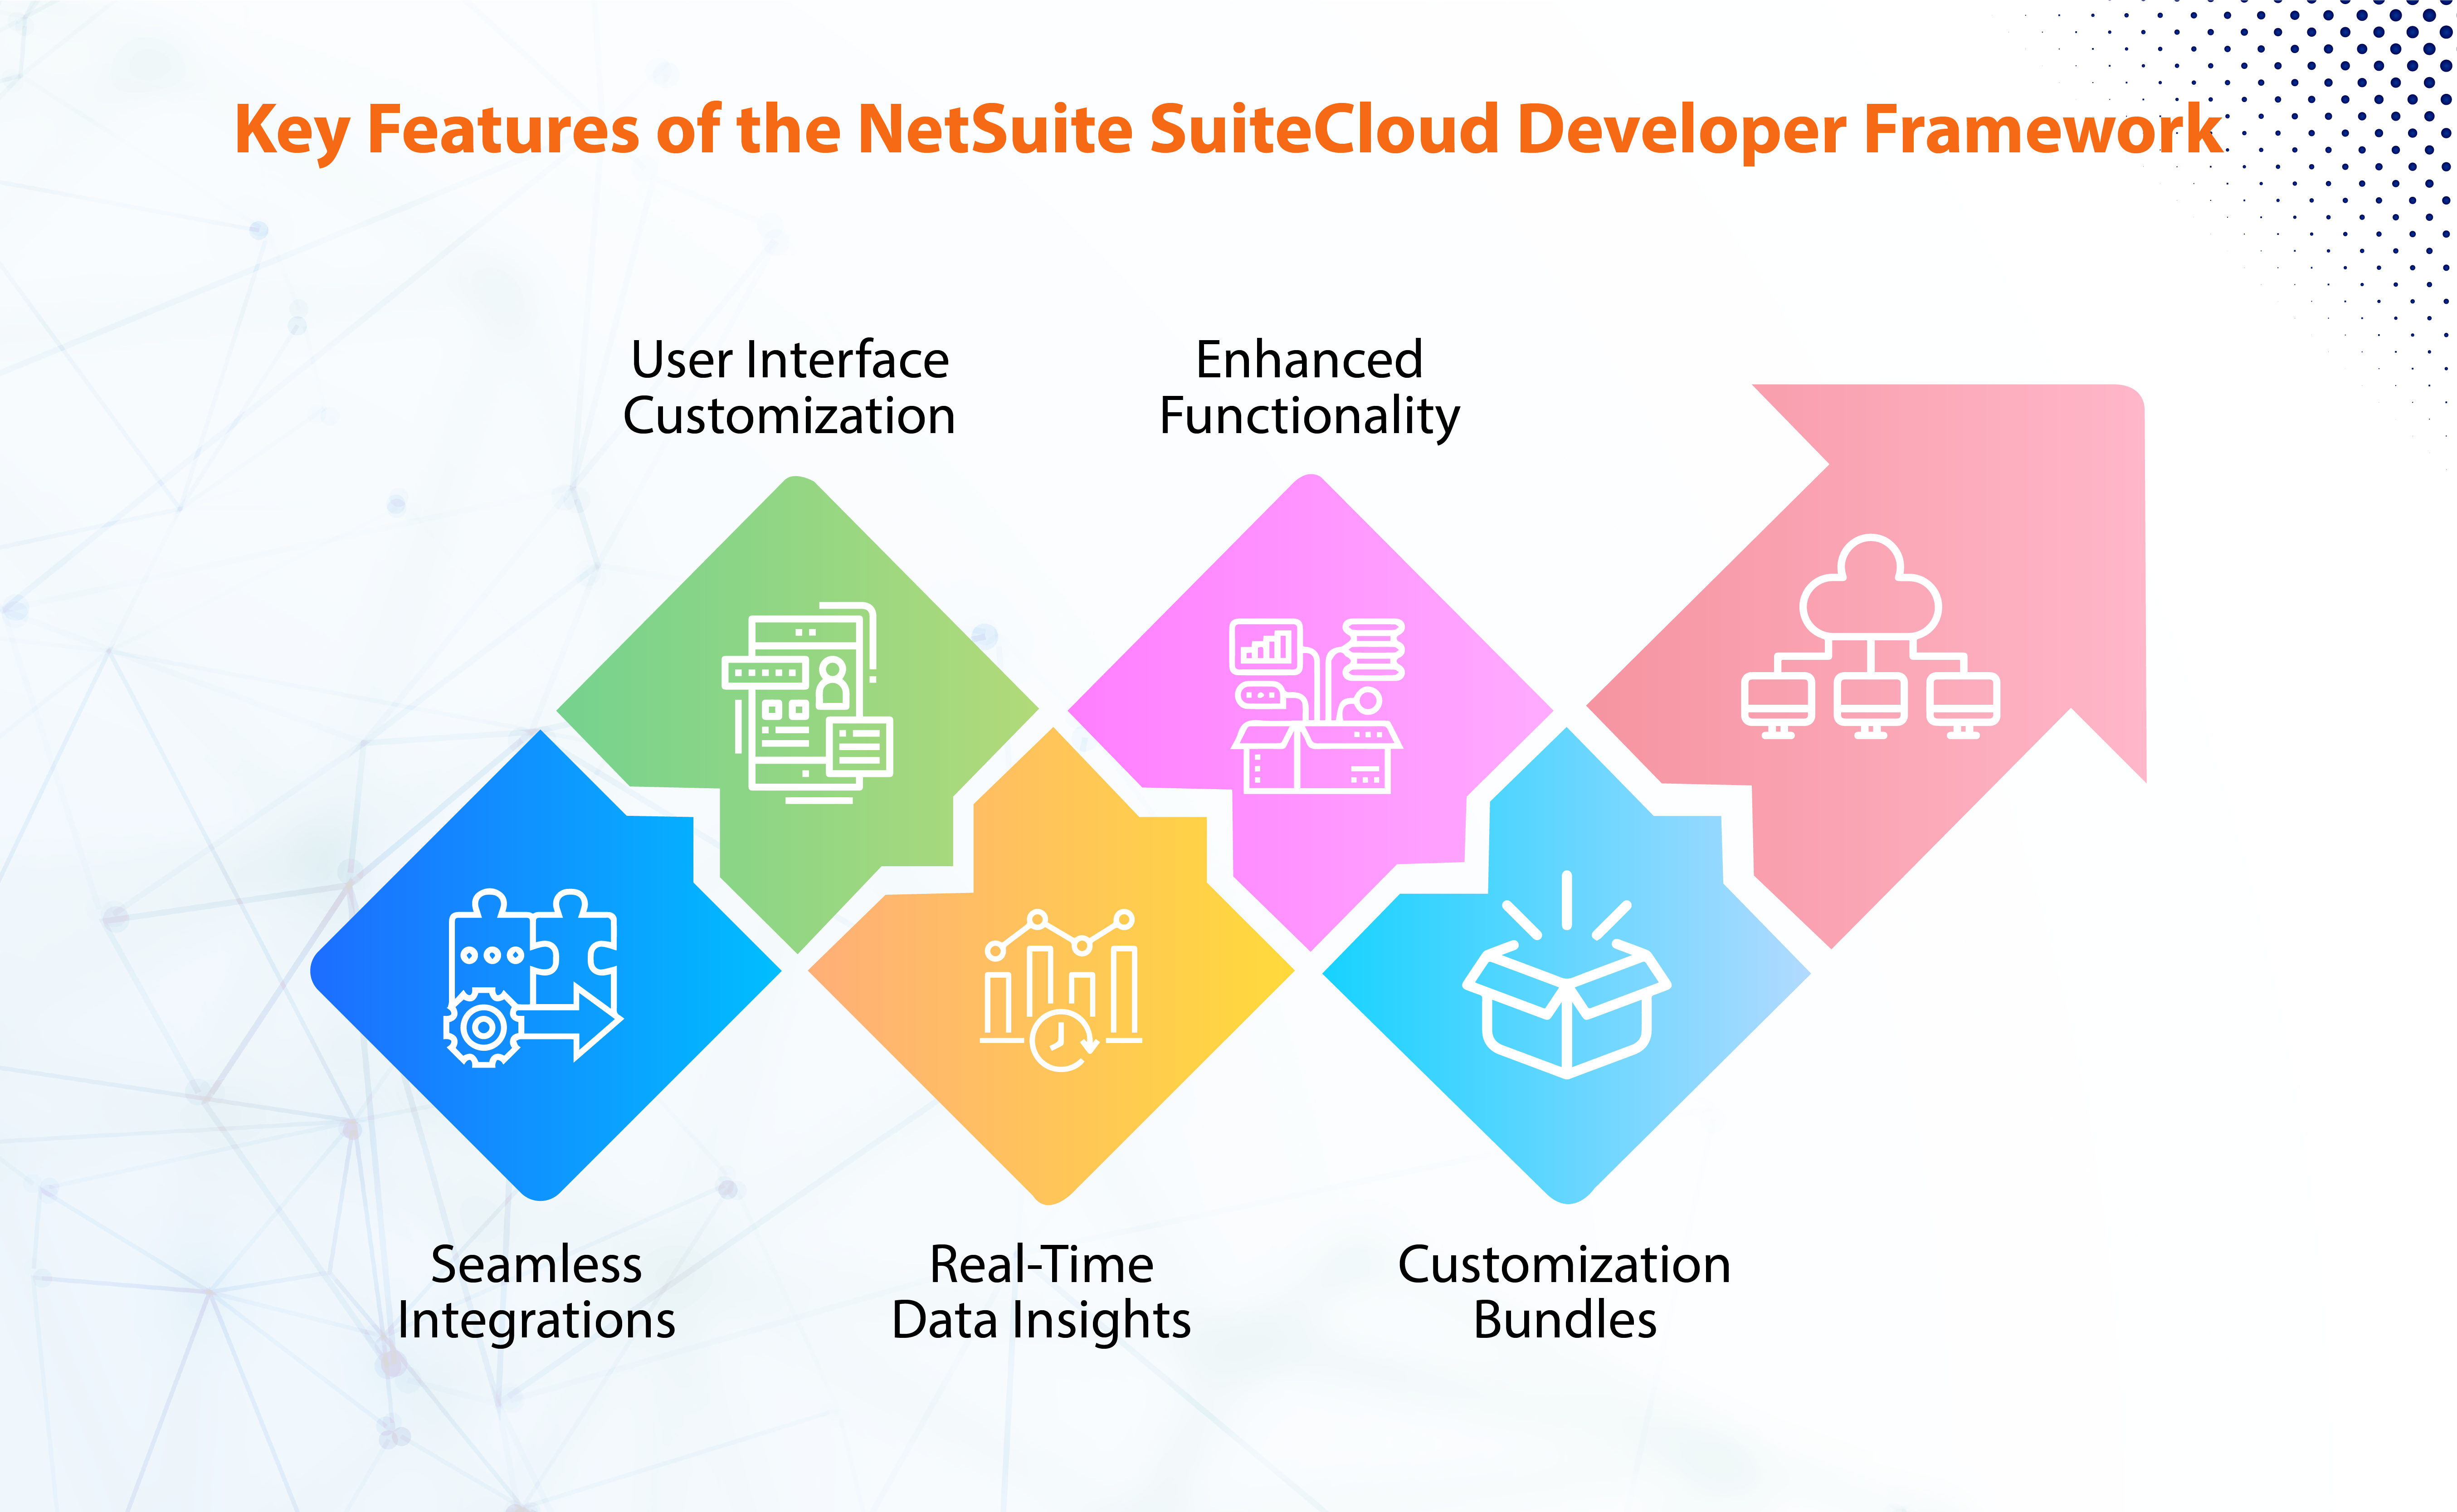 Key Features Of The NetSuite SuiteCloud Developer Framework